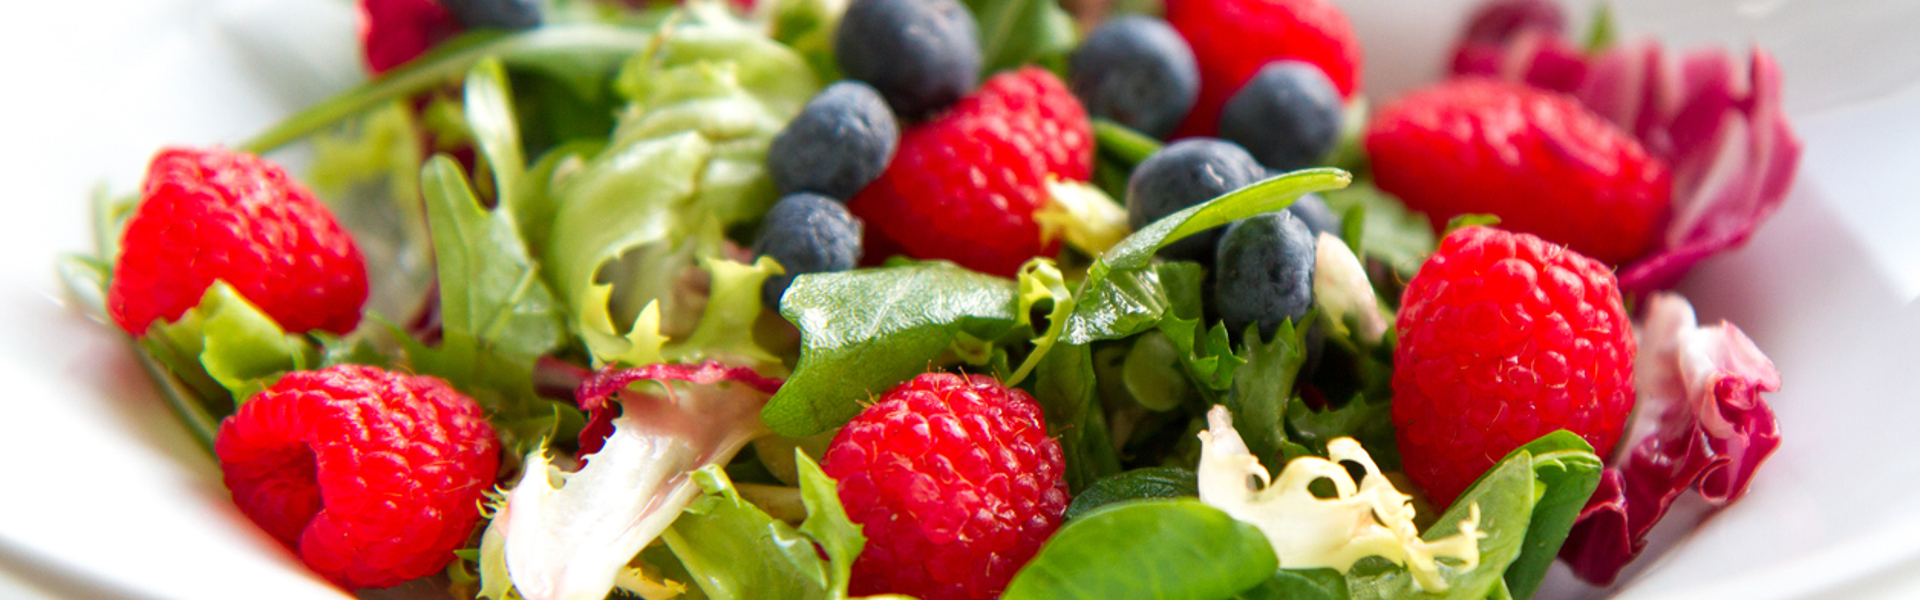 a fresh summer vegan salad with raspberries, blueberries and rocket salad leaves